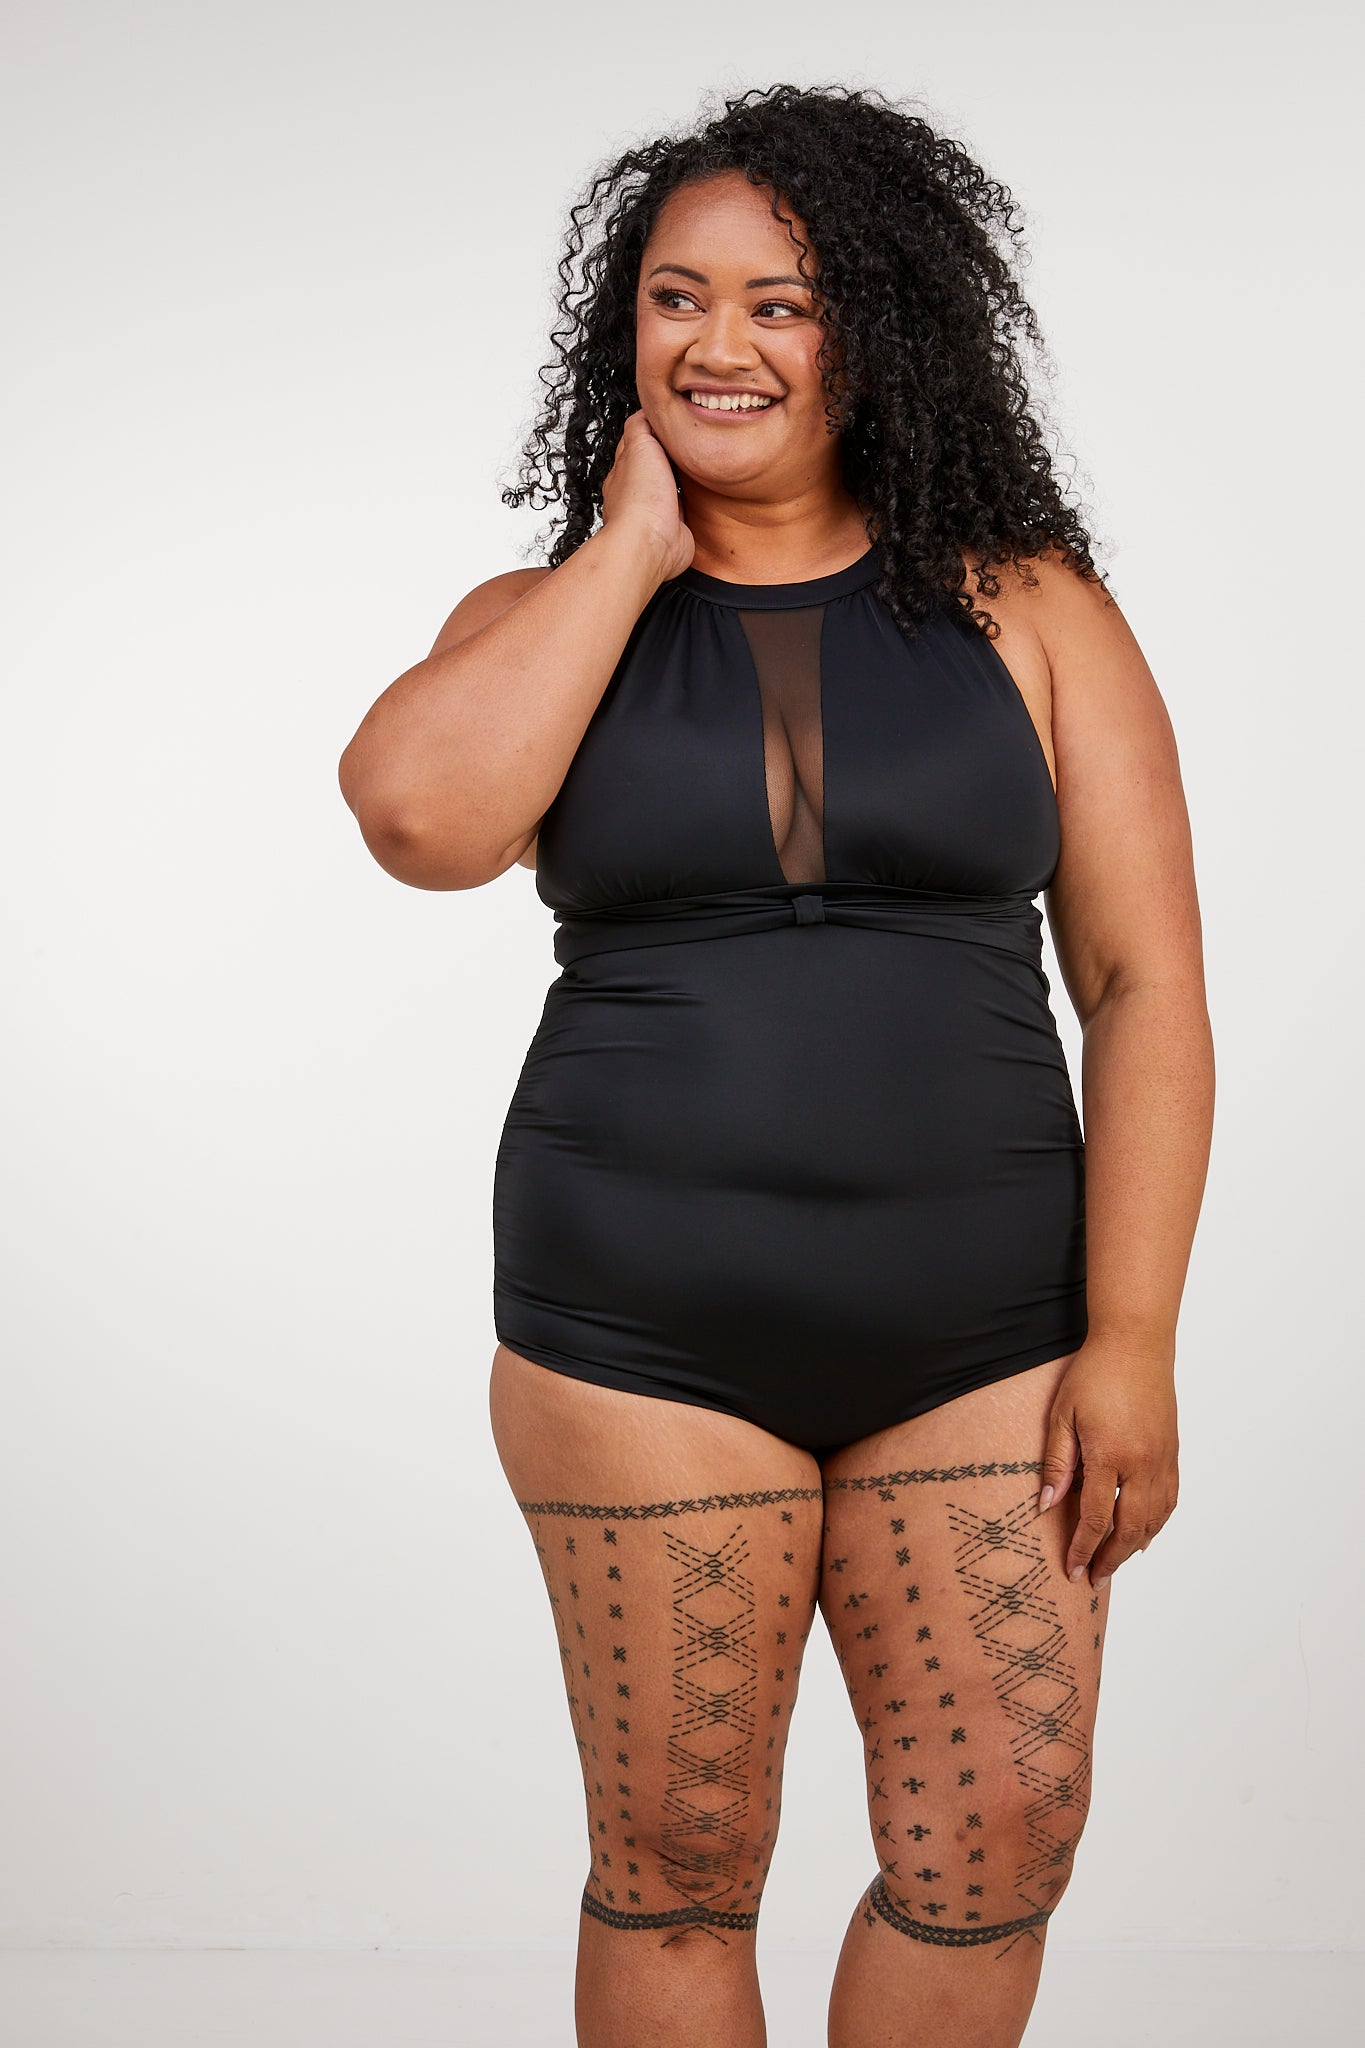 Iconix Women's Plus Size Black Fern Swimsuit, Shop Today. Get it Tomorrow!